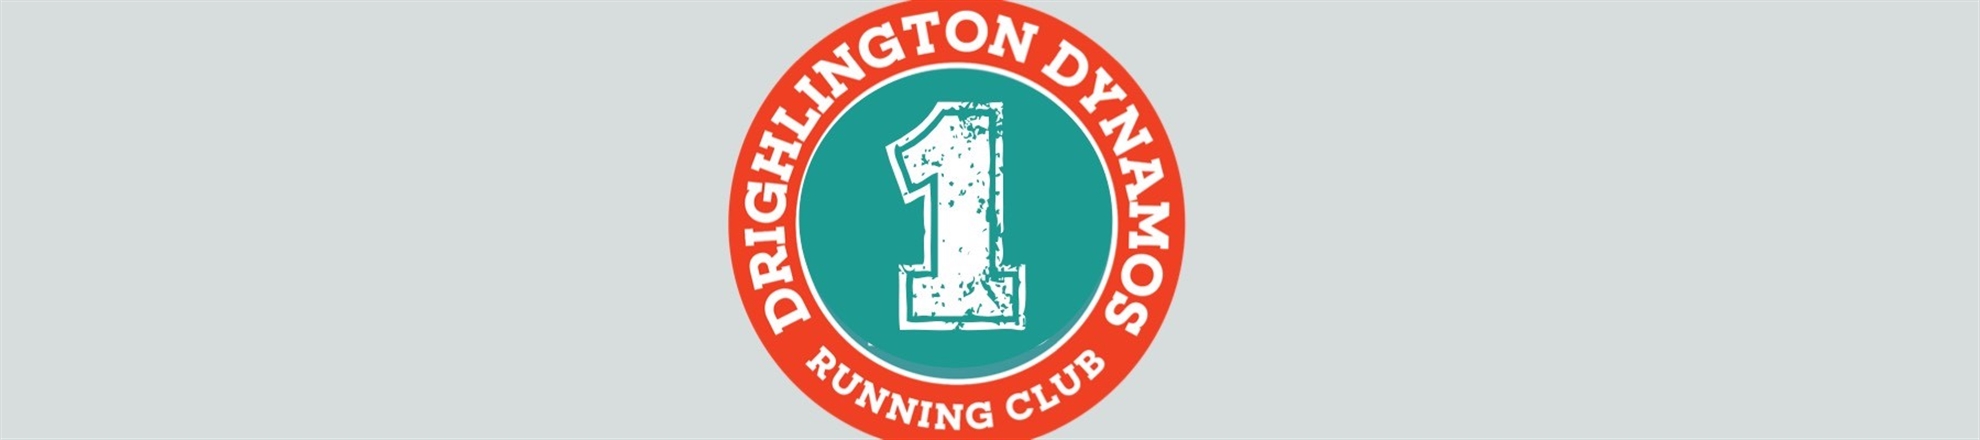 Drighlington Community Sports Club - Group 1